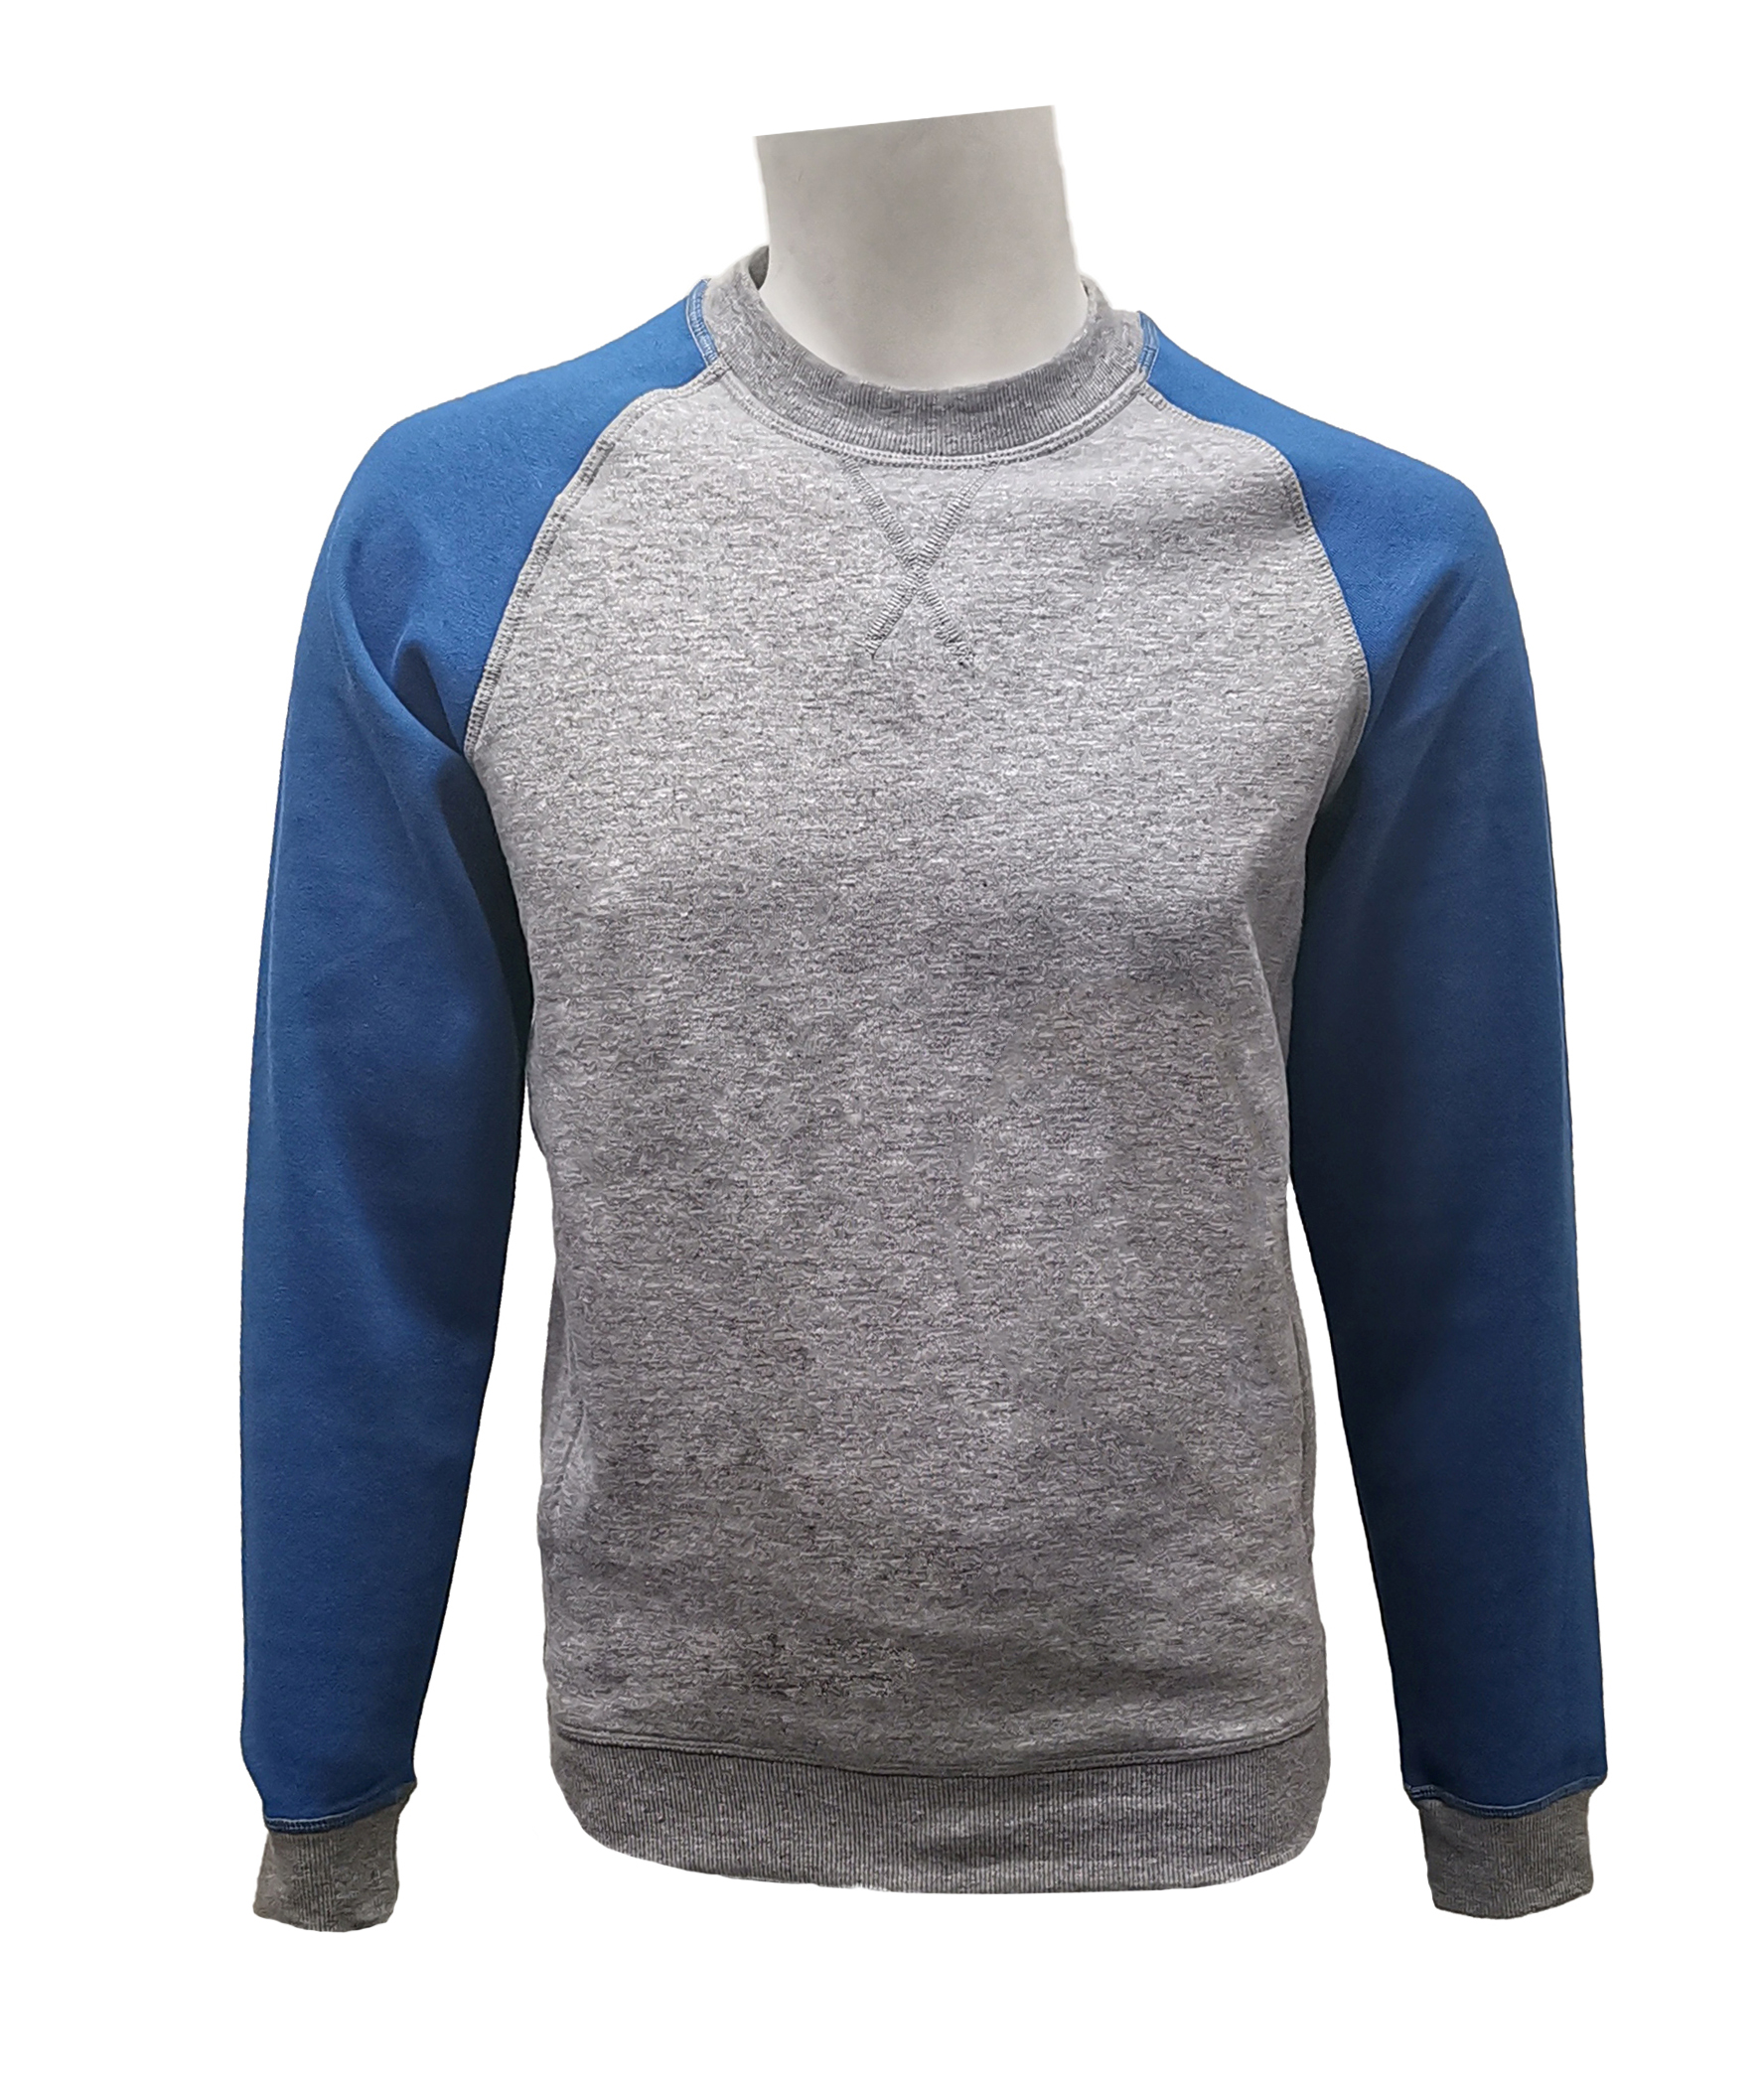 Adult Camo Hooded Sweatshirt (Style # TCL16130R)